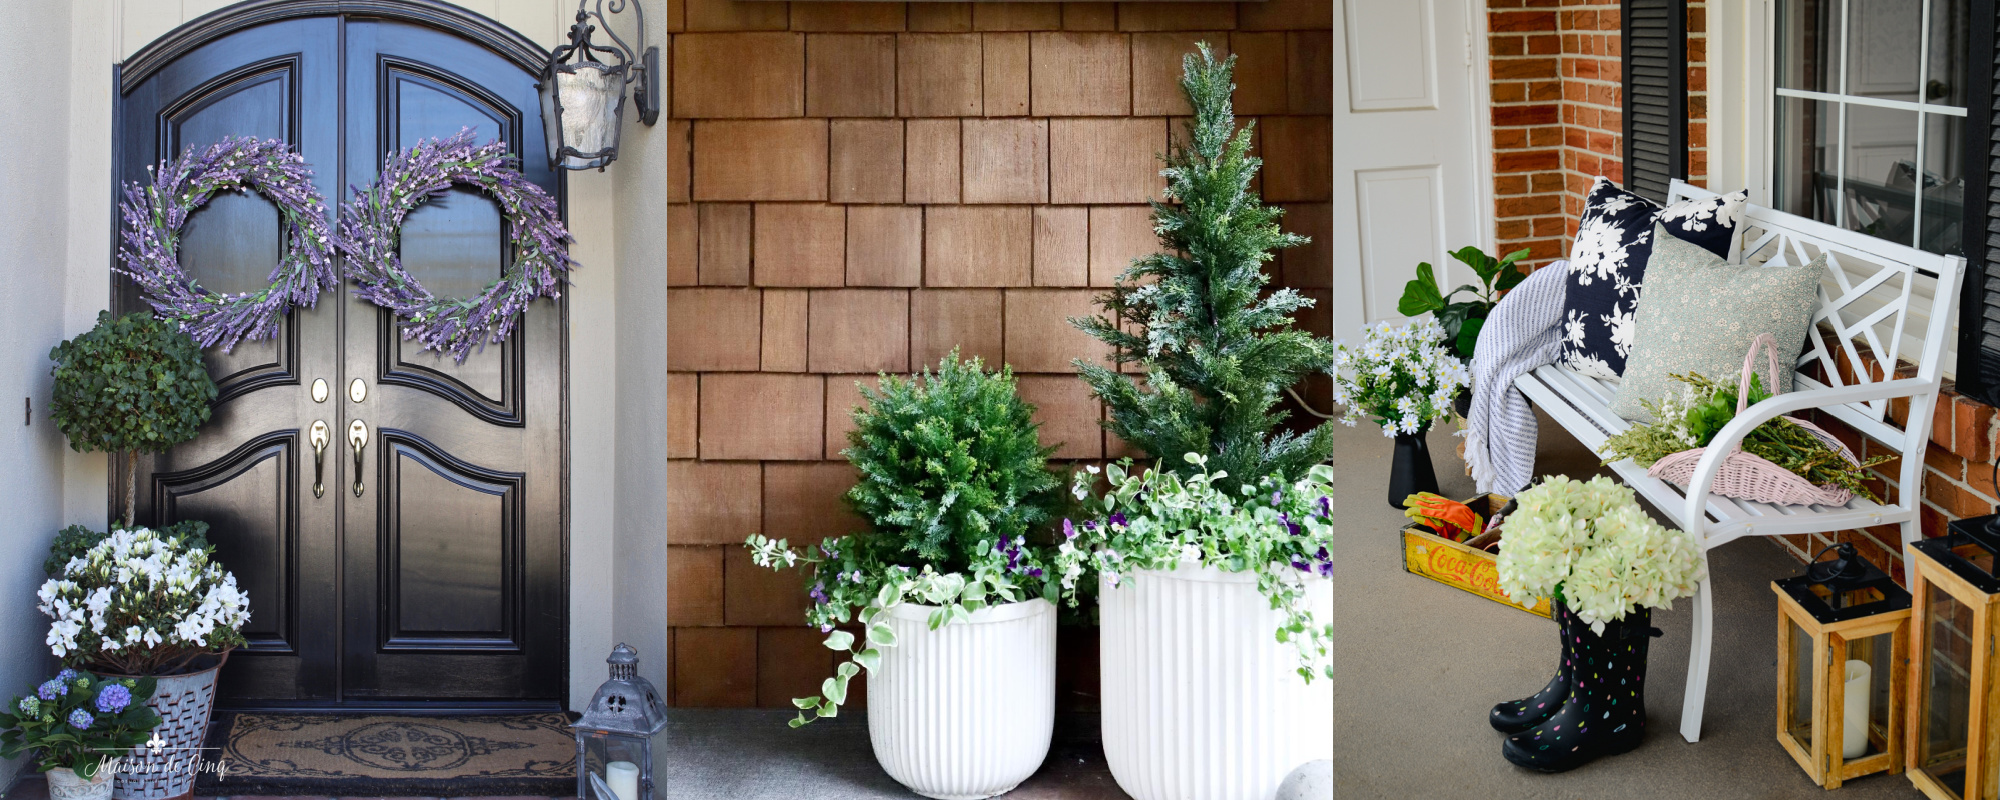 DIY Raised Herb Garden Planter Box: Maison de Cinq